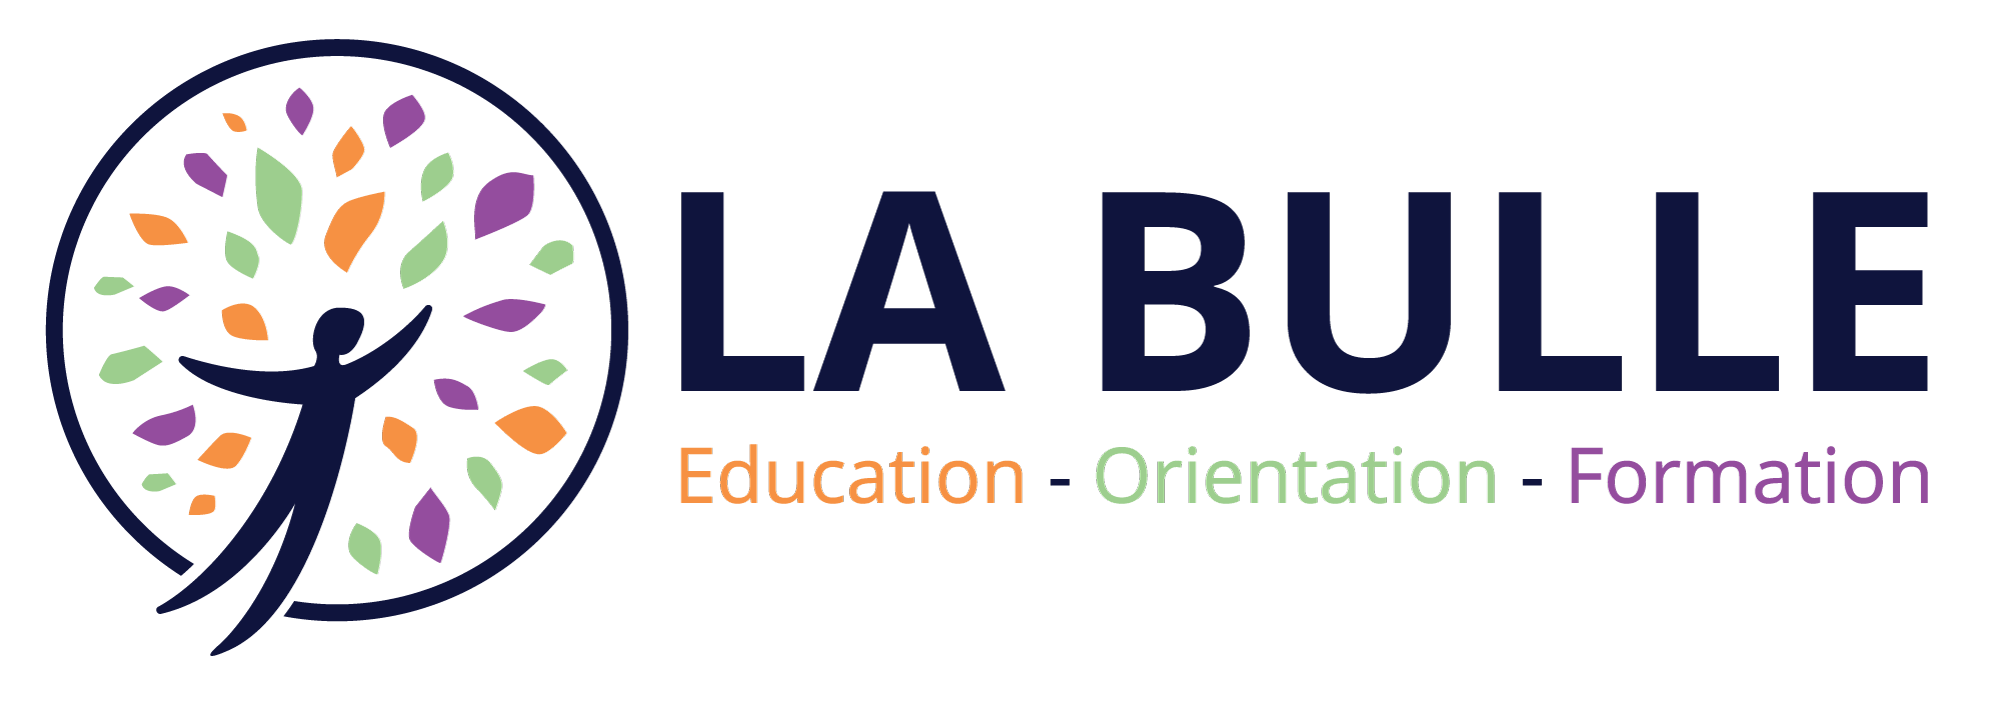 La Bulle- Haut Rhin - Education - Orientation - Formation